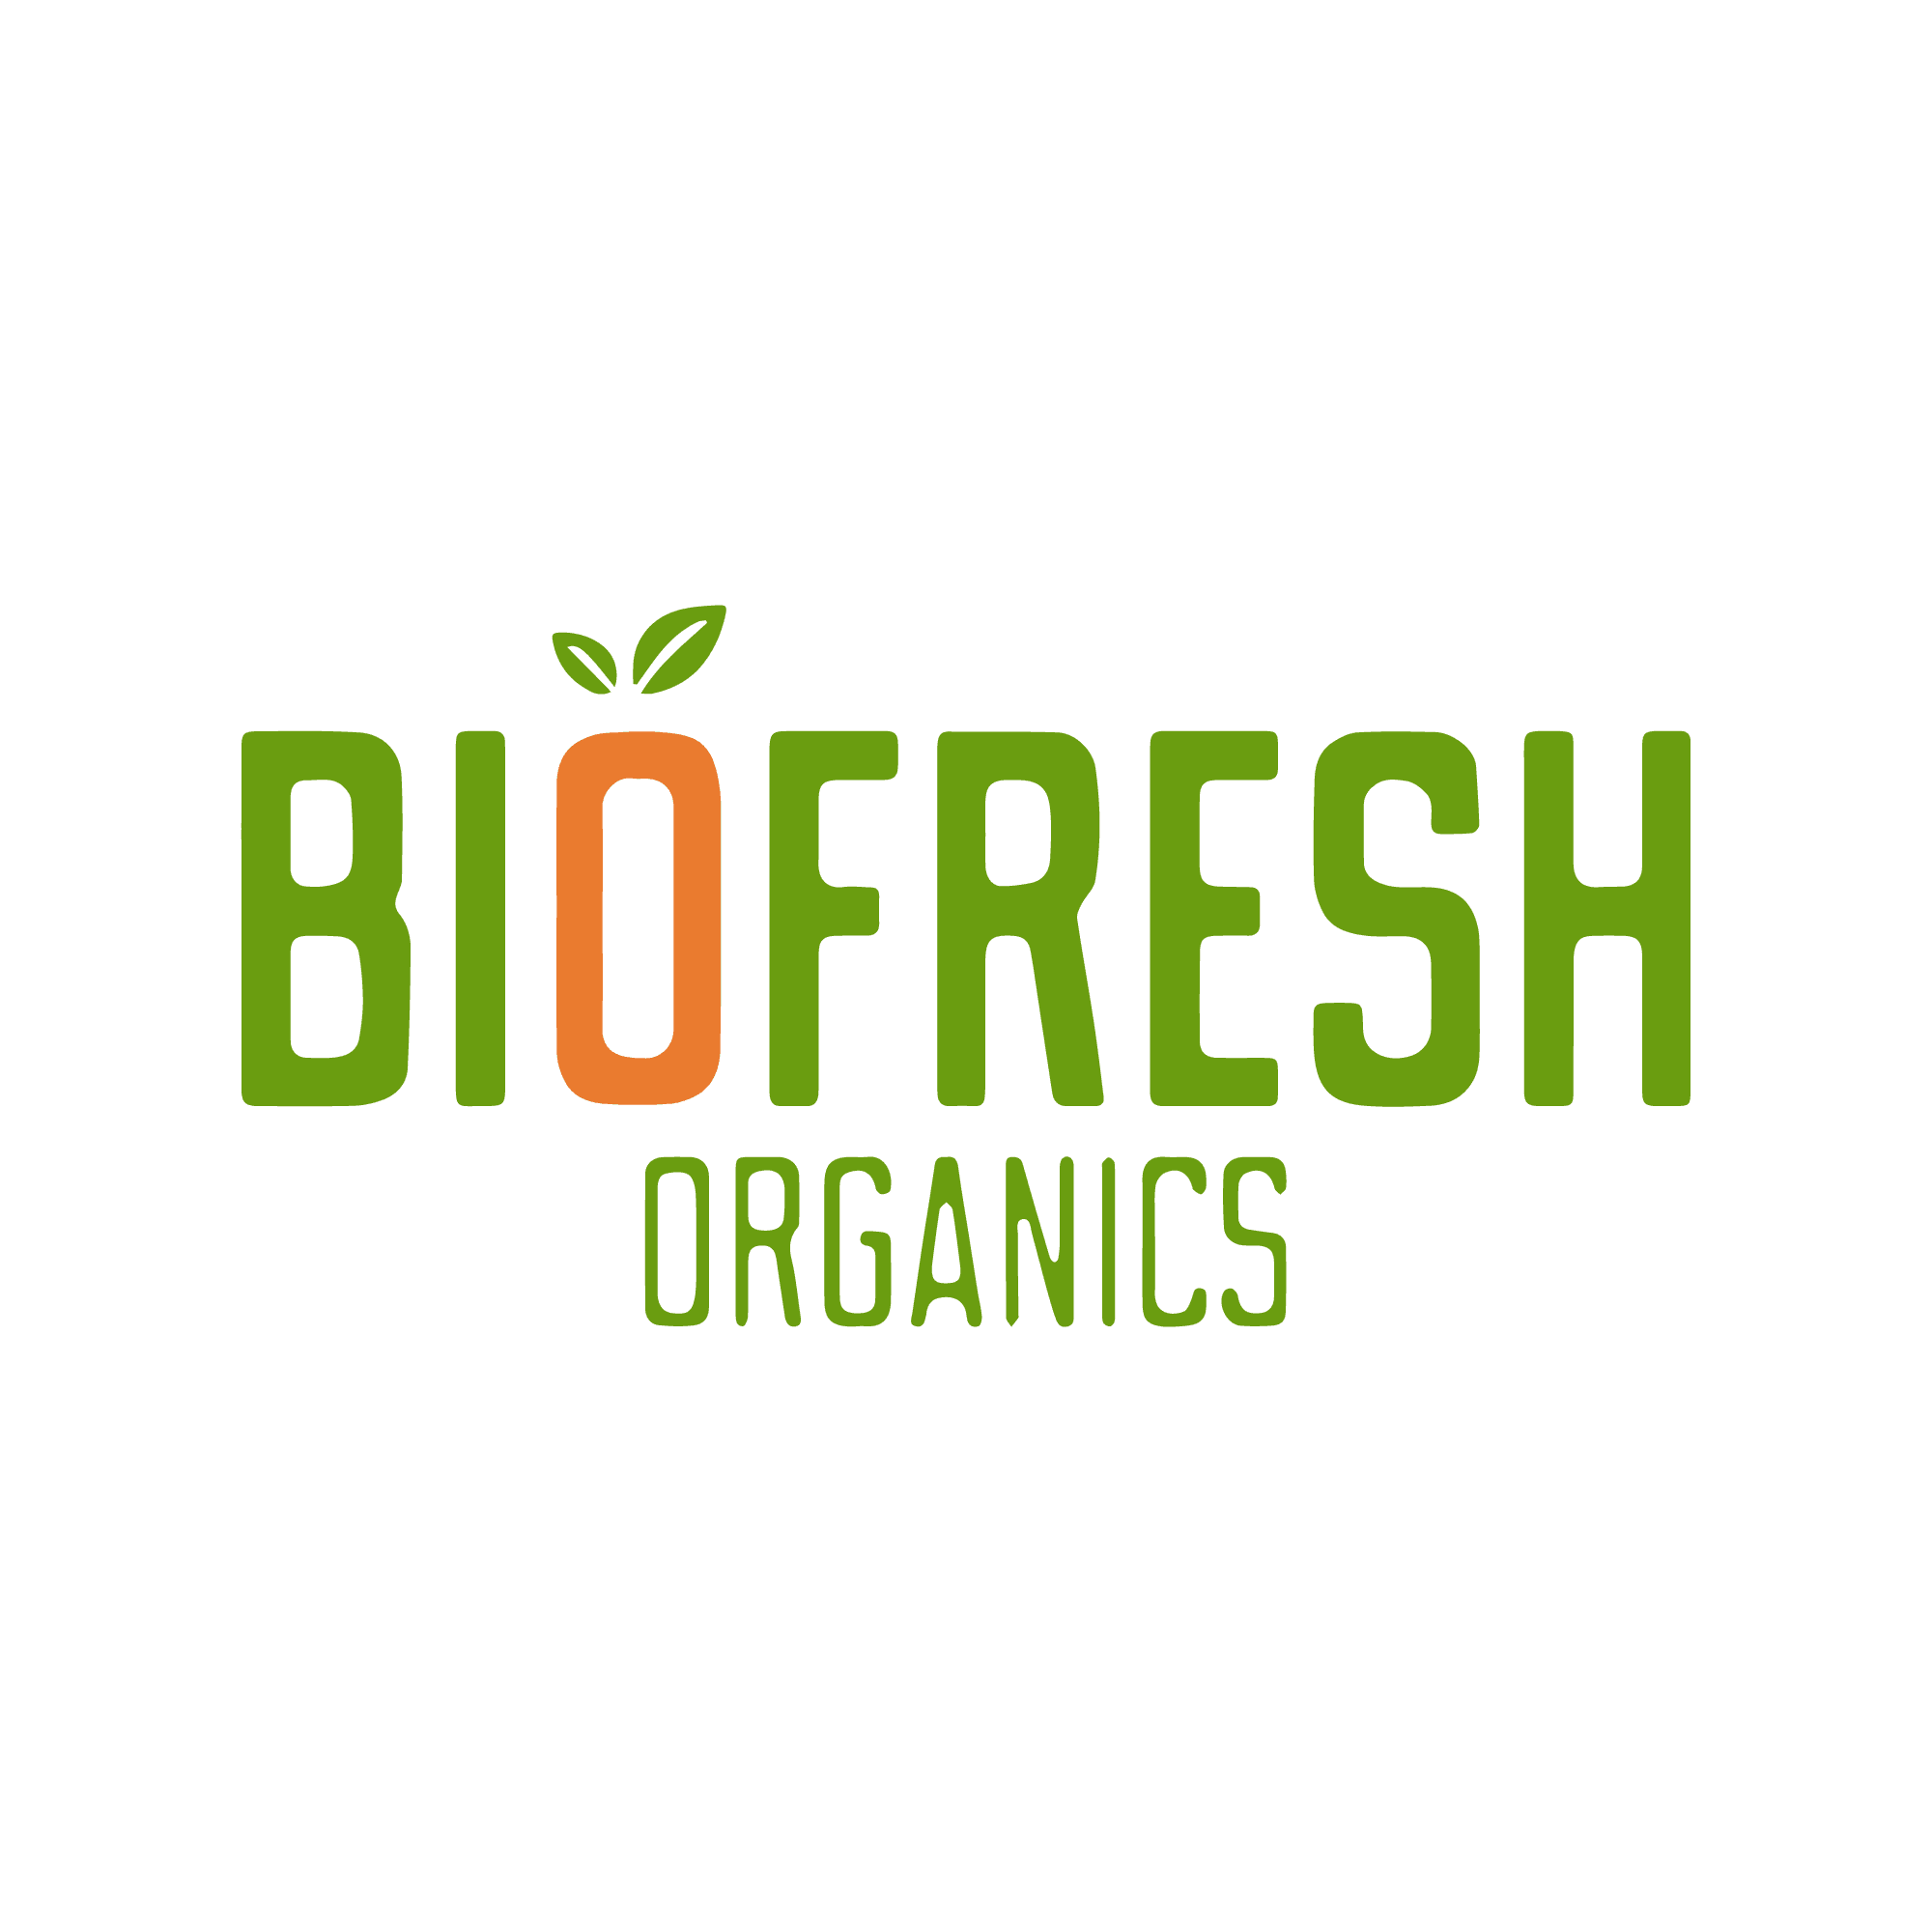 BioFresh Organics